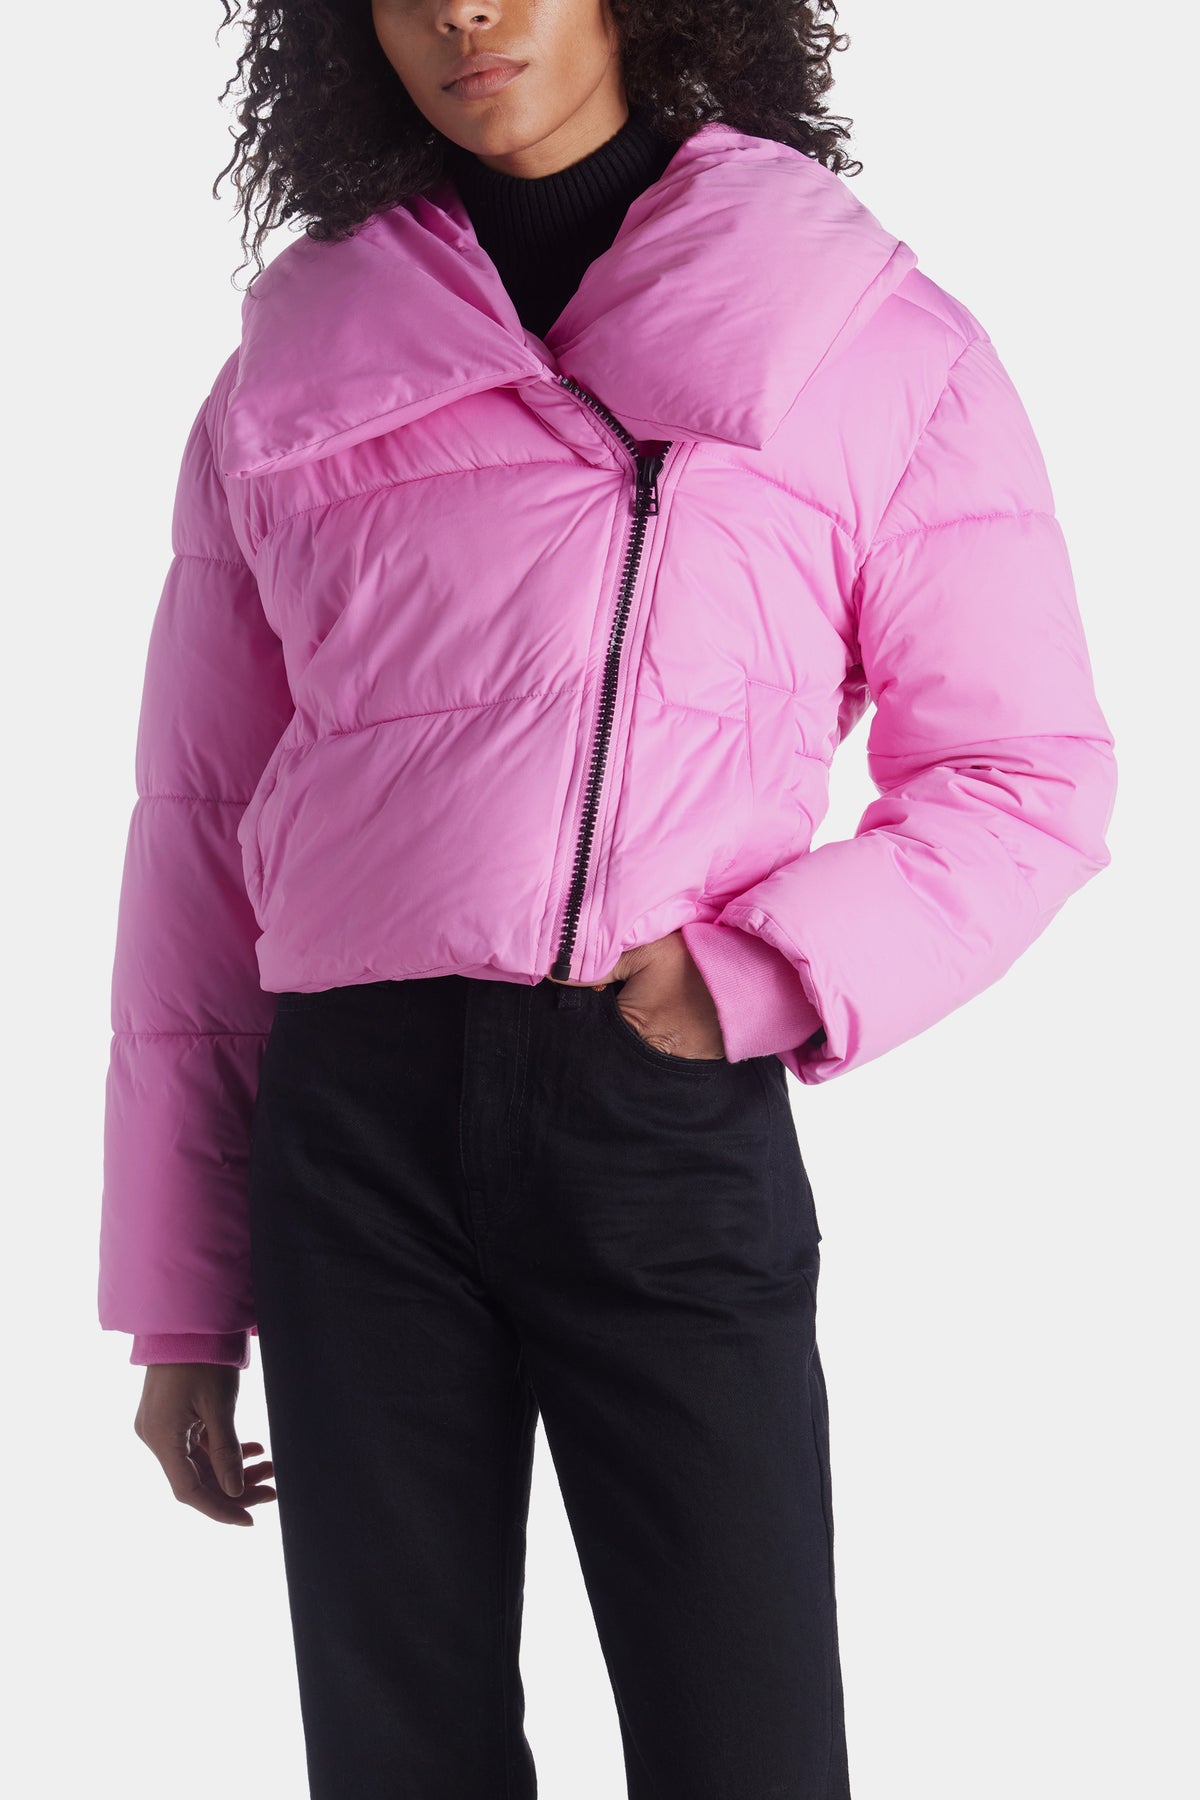 Groupie Love Women's Pink Crop Puffer Jacket